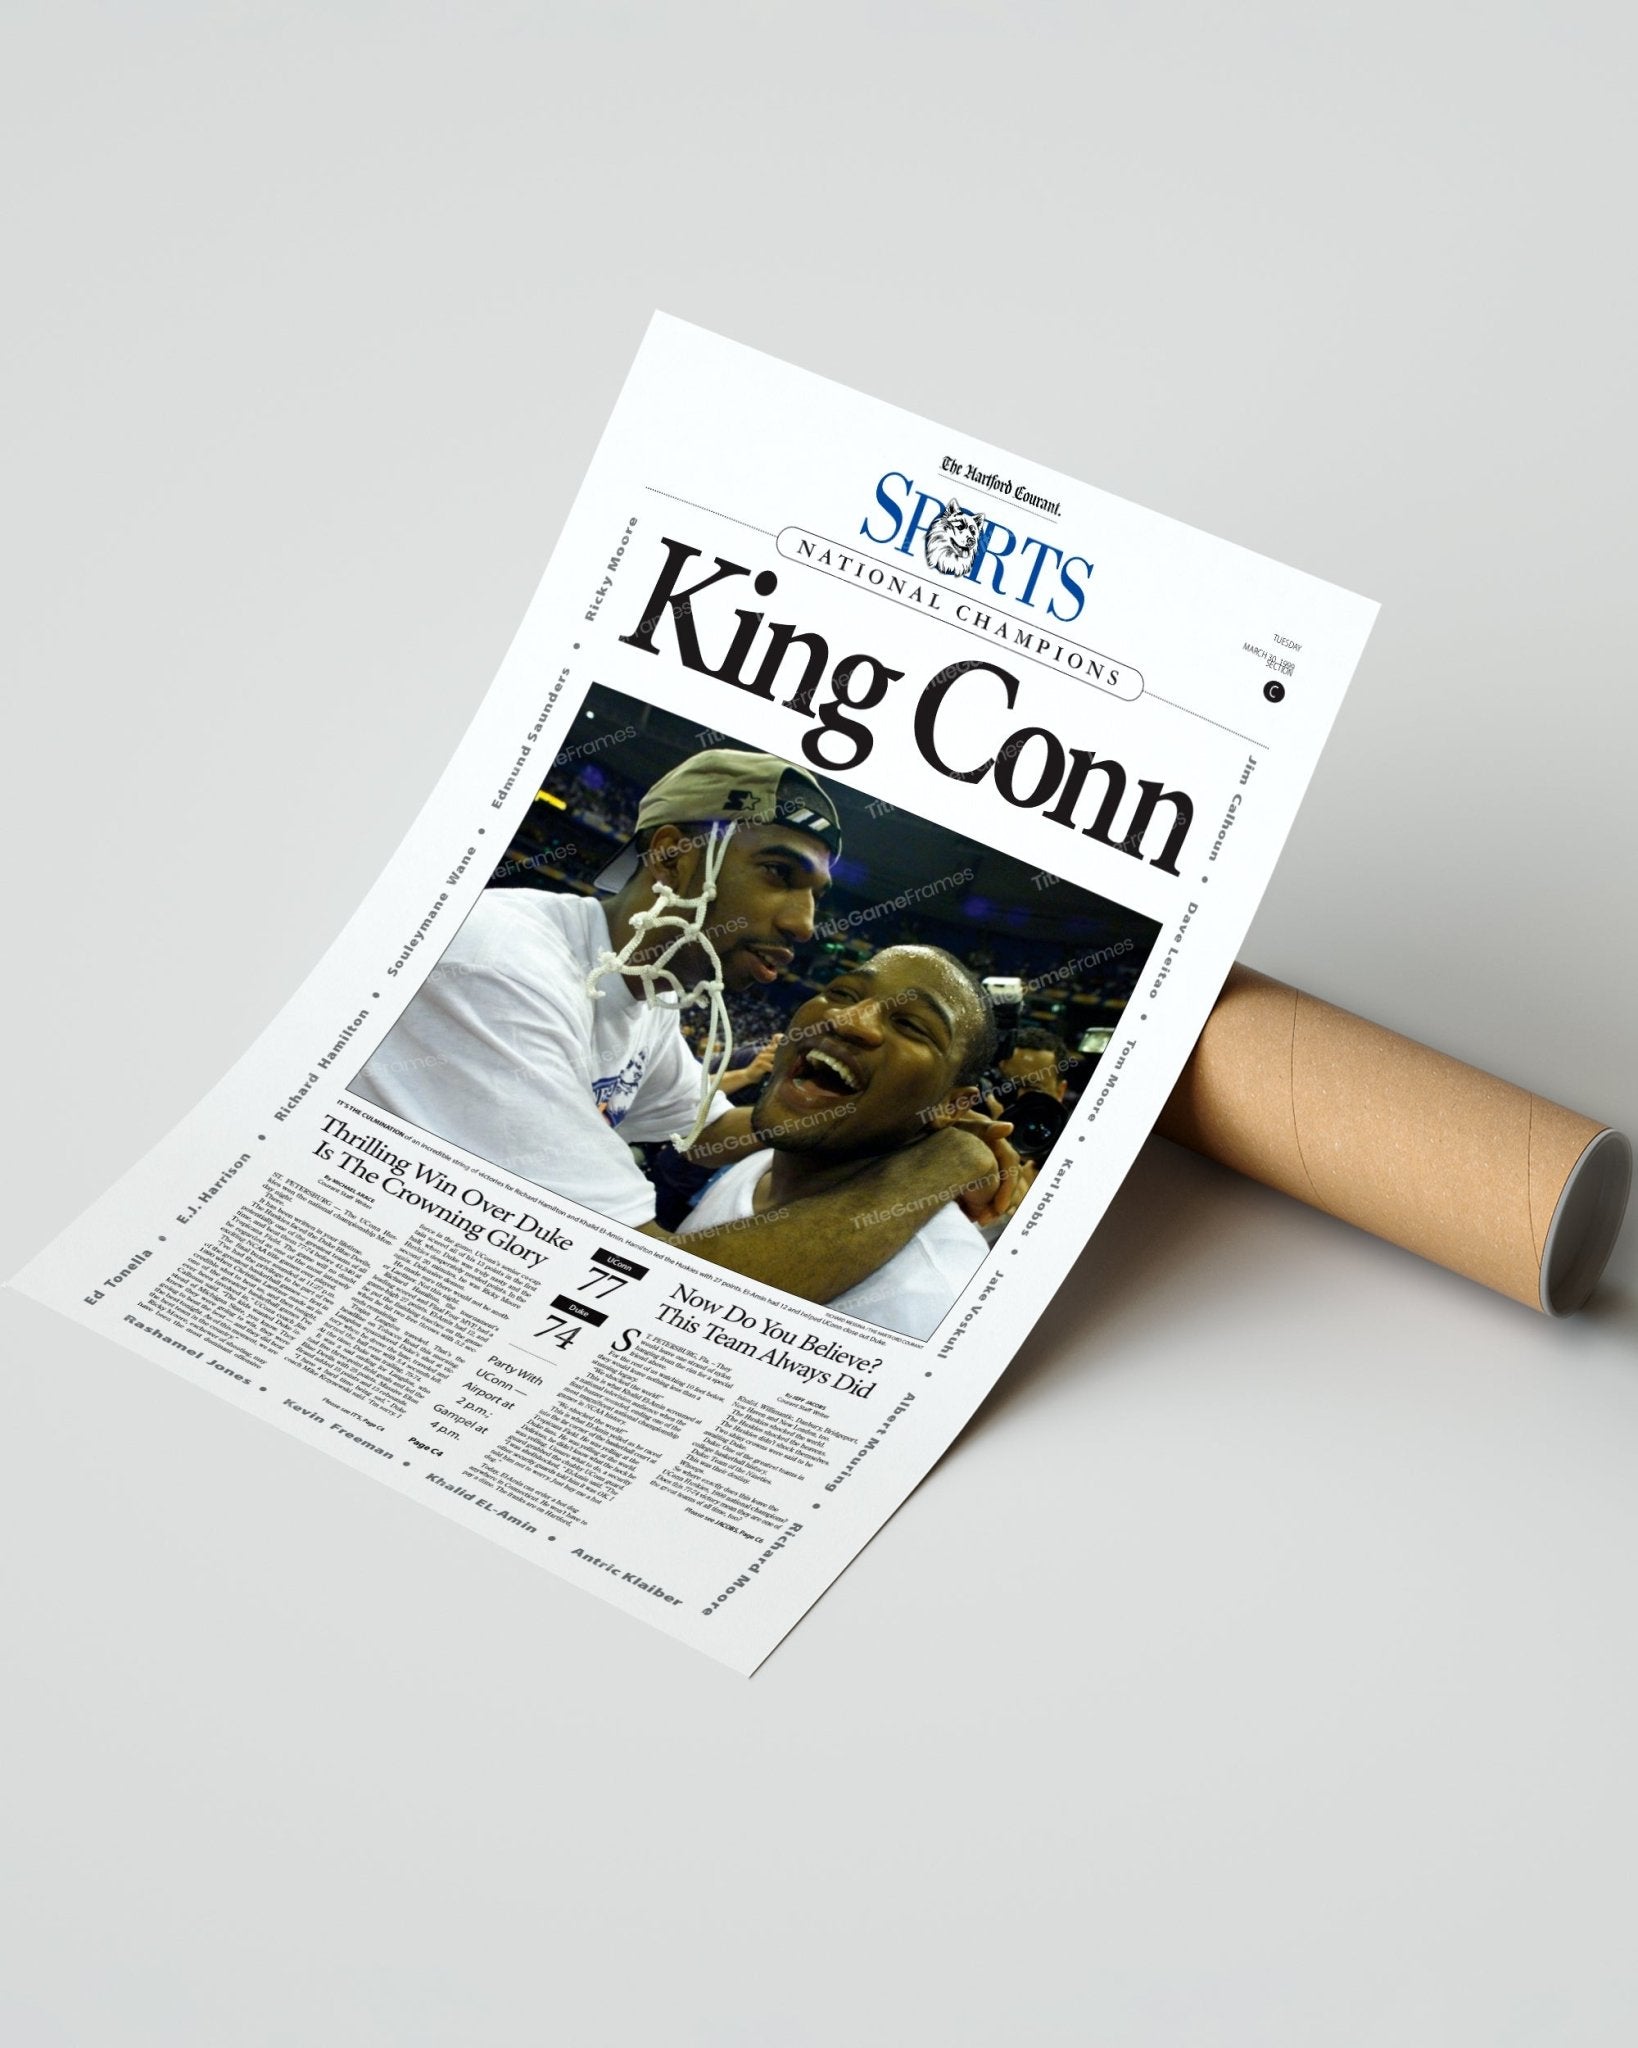 1999 UConn Huskies NCAA College Basketball Champions 'King Conn' Framed Newspaper - Title Game Frames